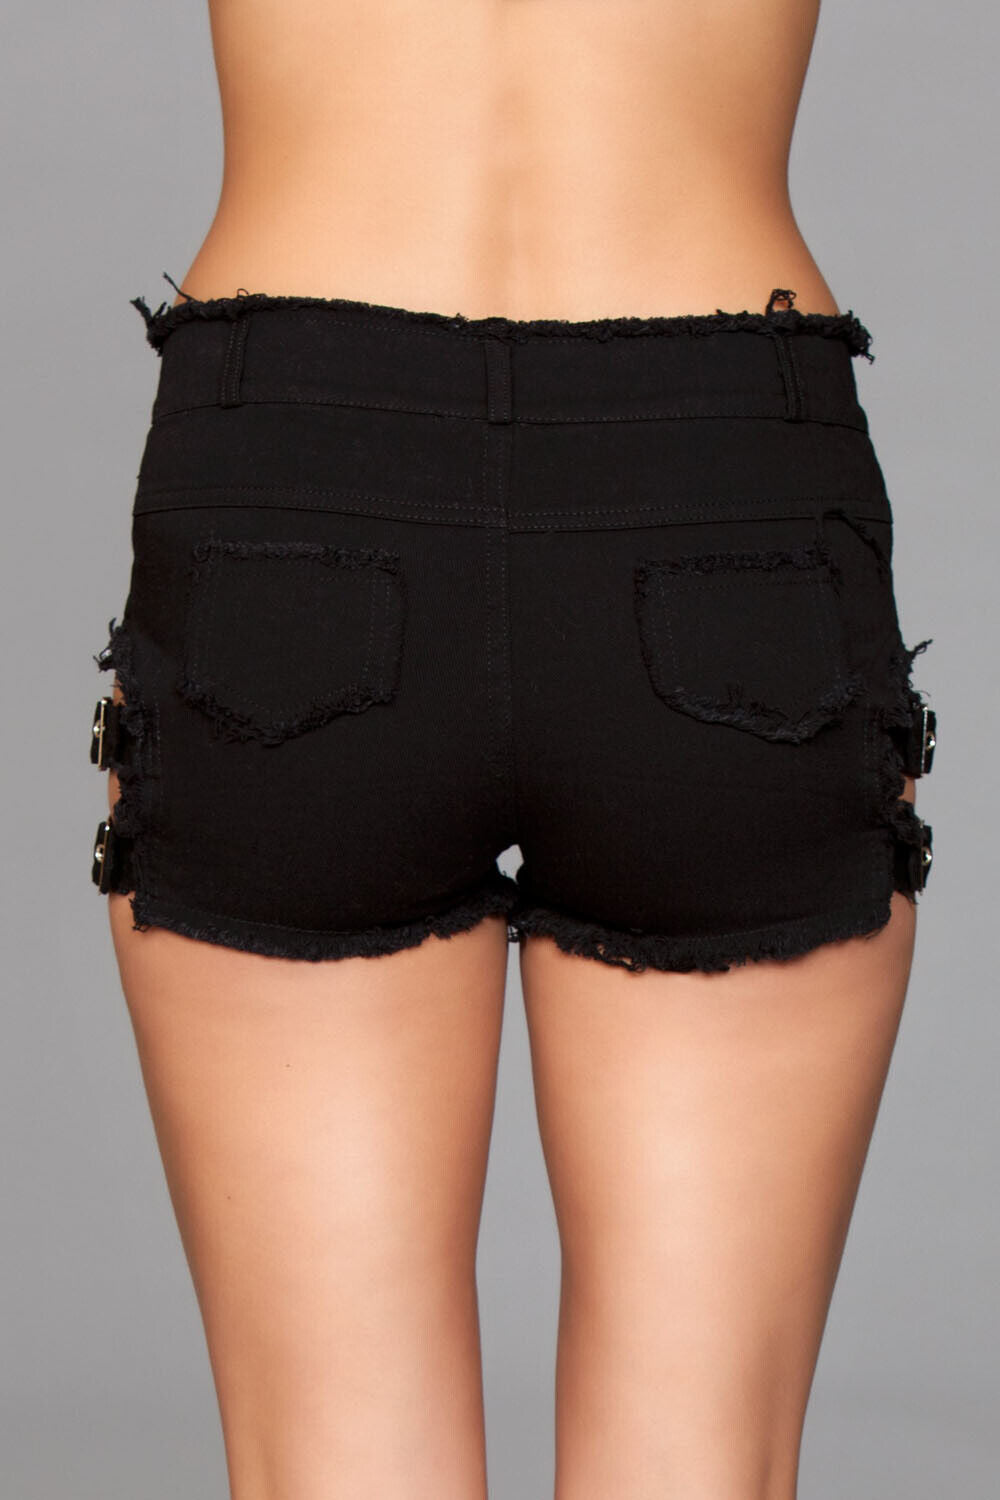 BeWicked USA Women Sexy Hot Denim Buckled Down Denim Shorts - Black J10BK - Small